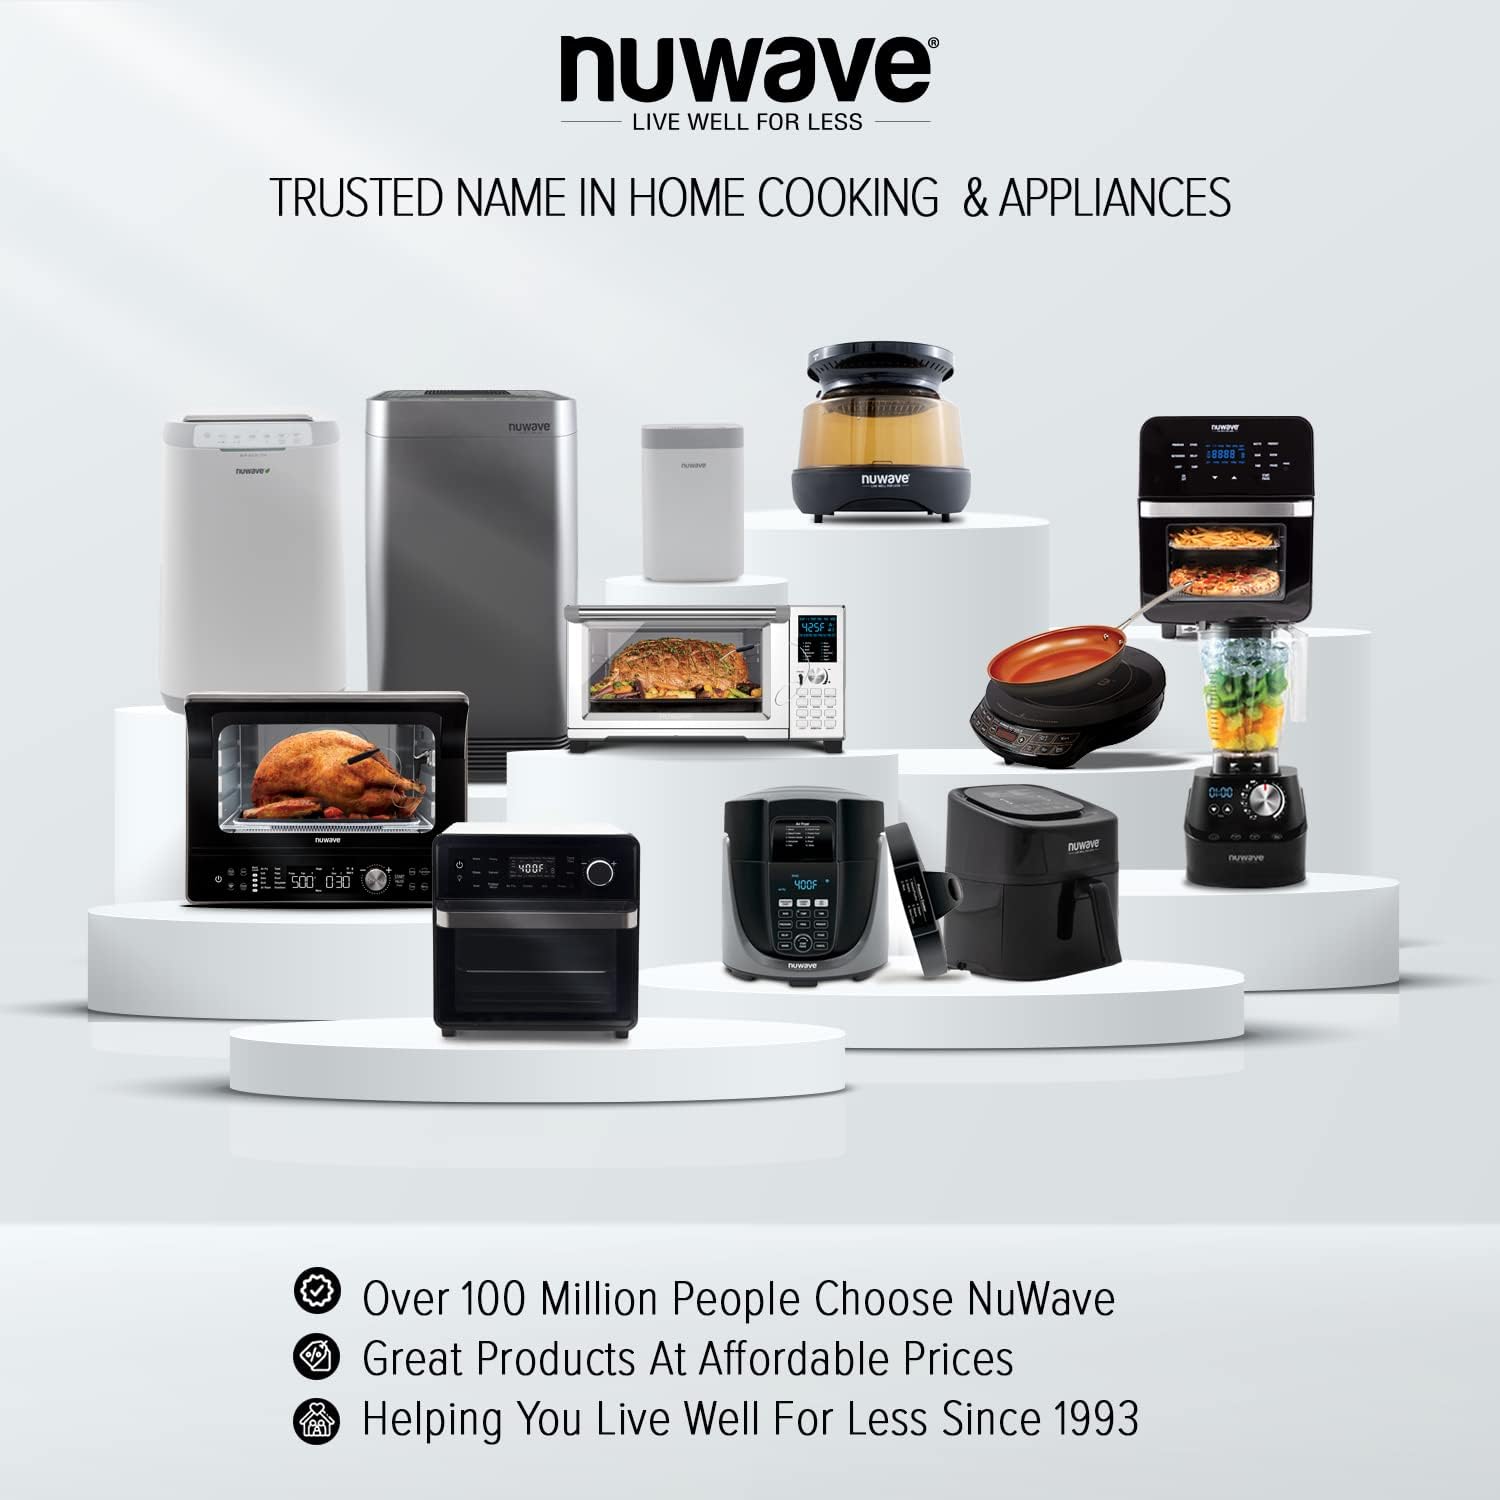 Nuwave Bravo 12-in-1 Digital Toaster Oven Review